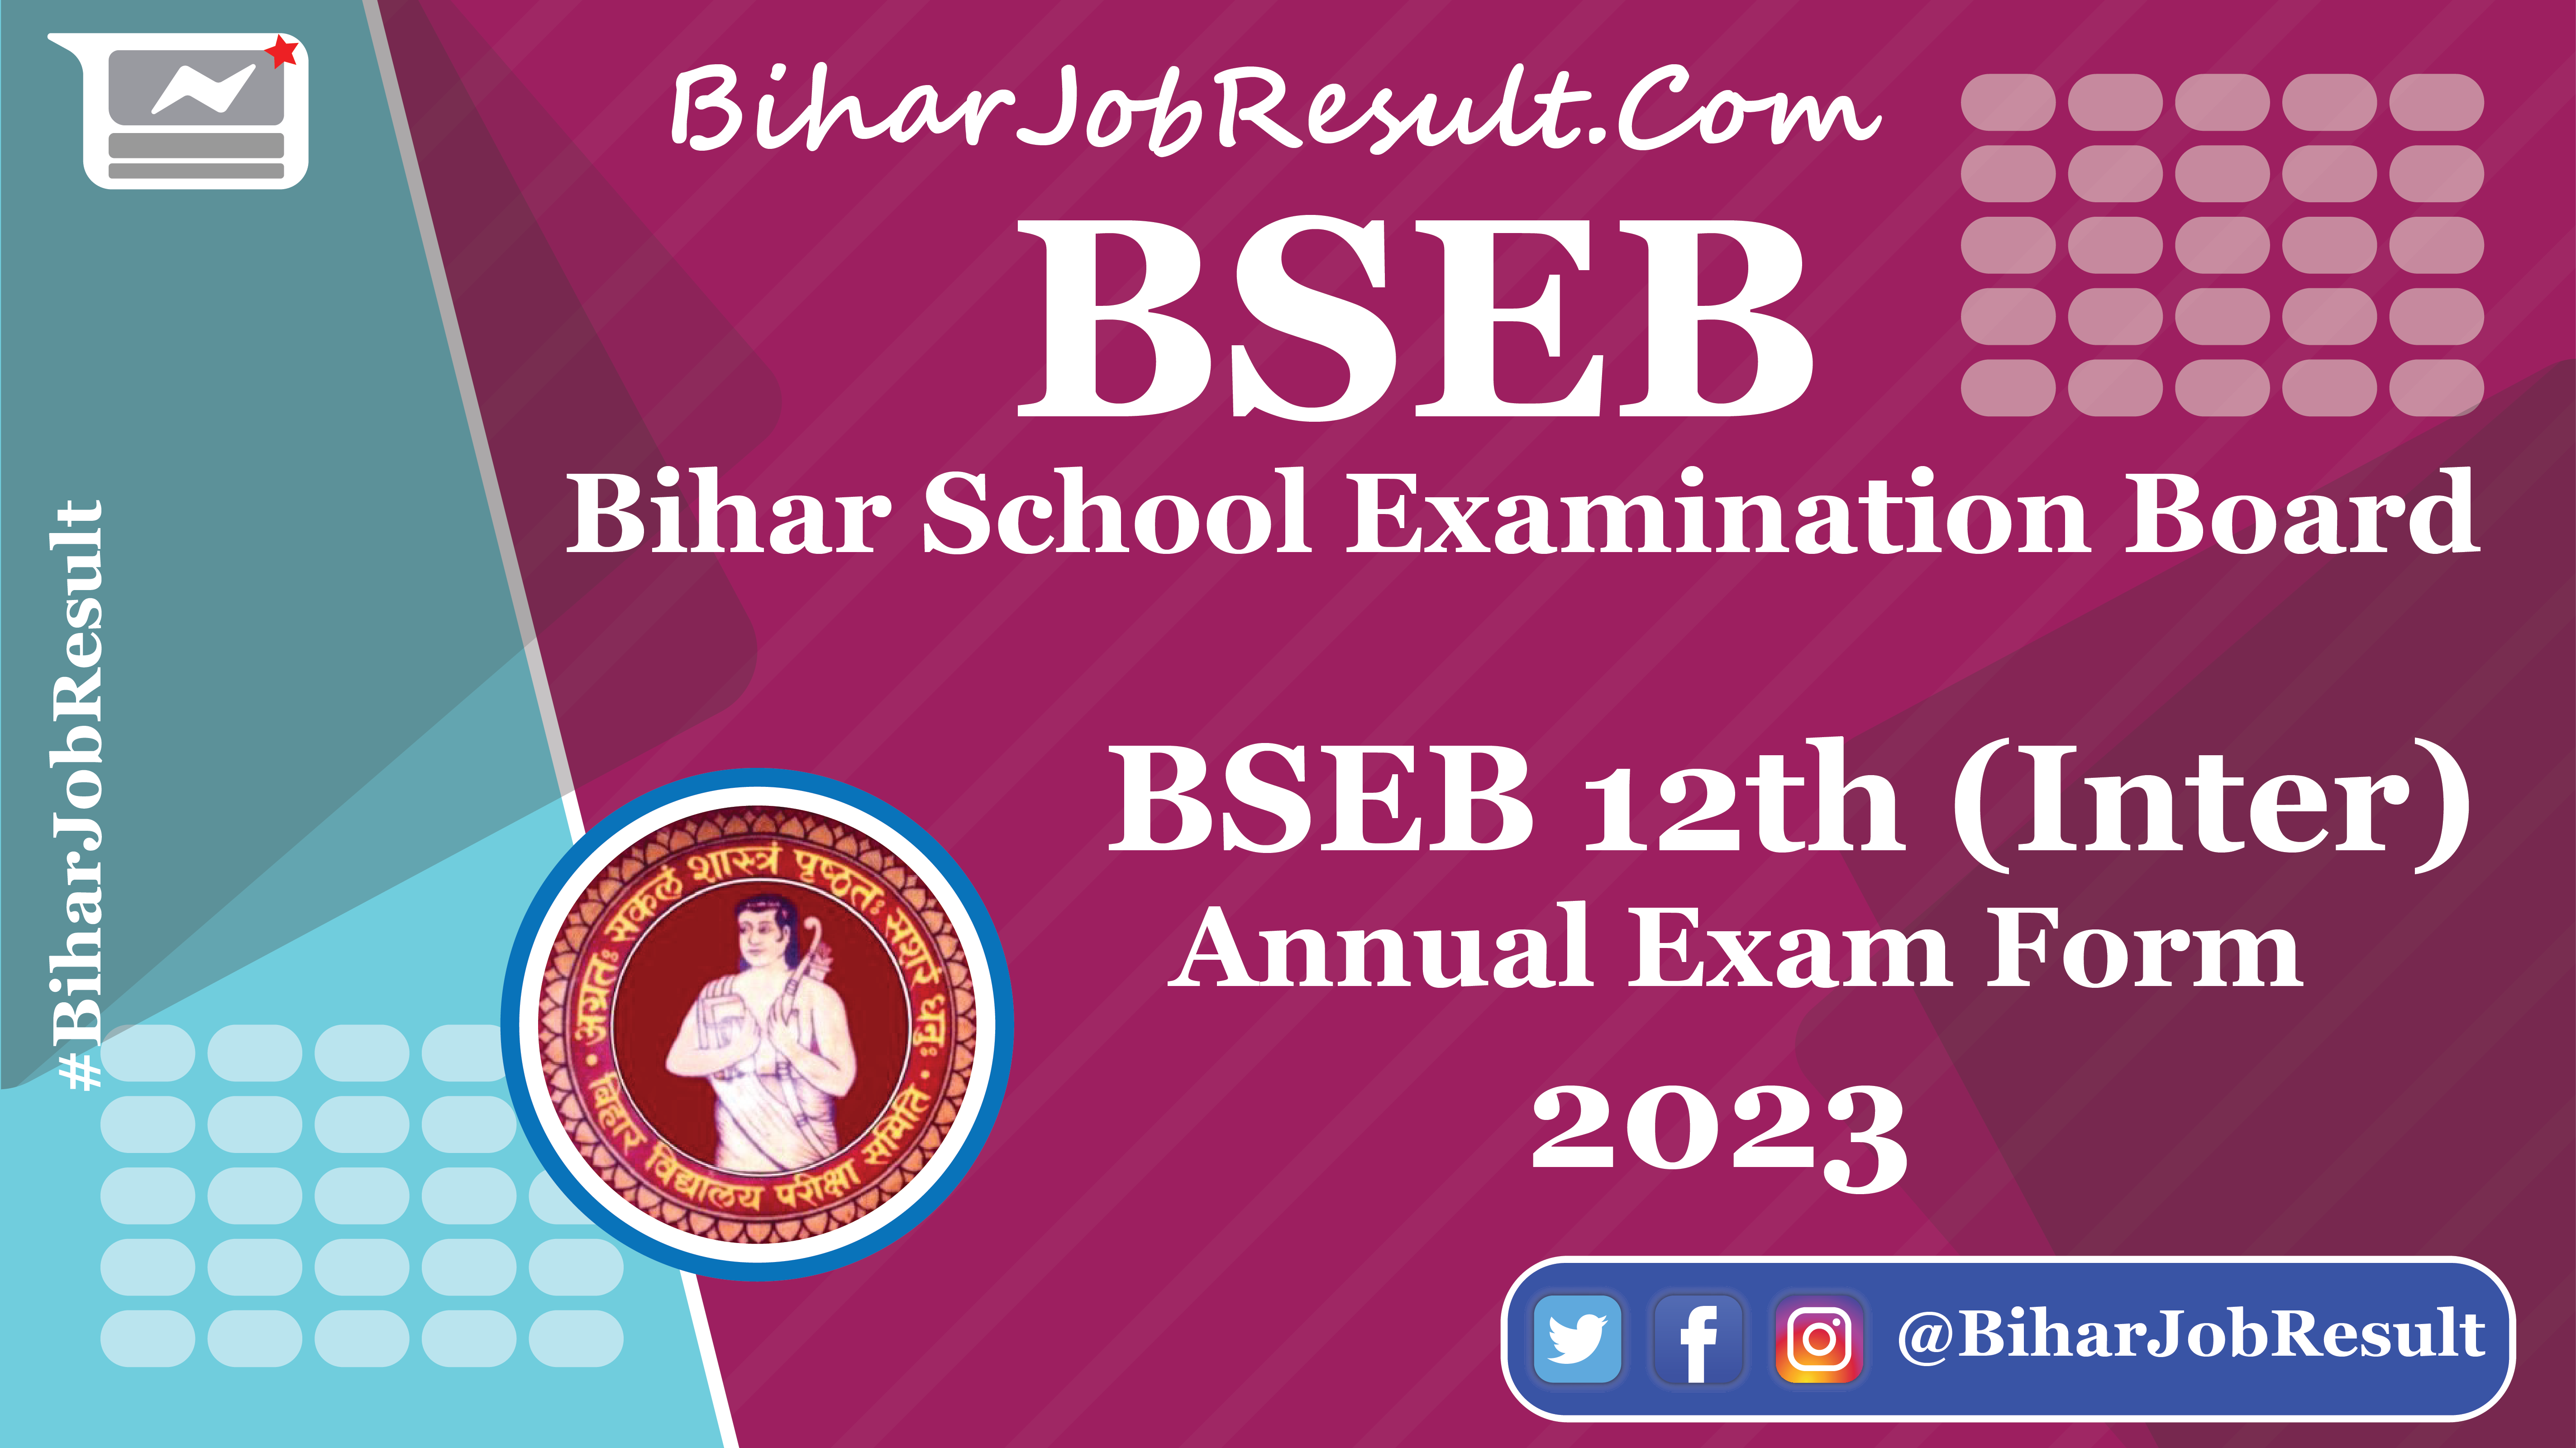 BSEB 12th Annual Exam Form 2023